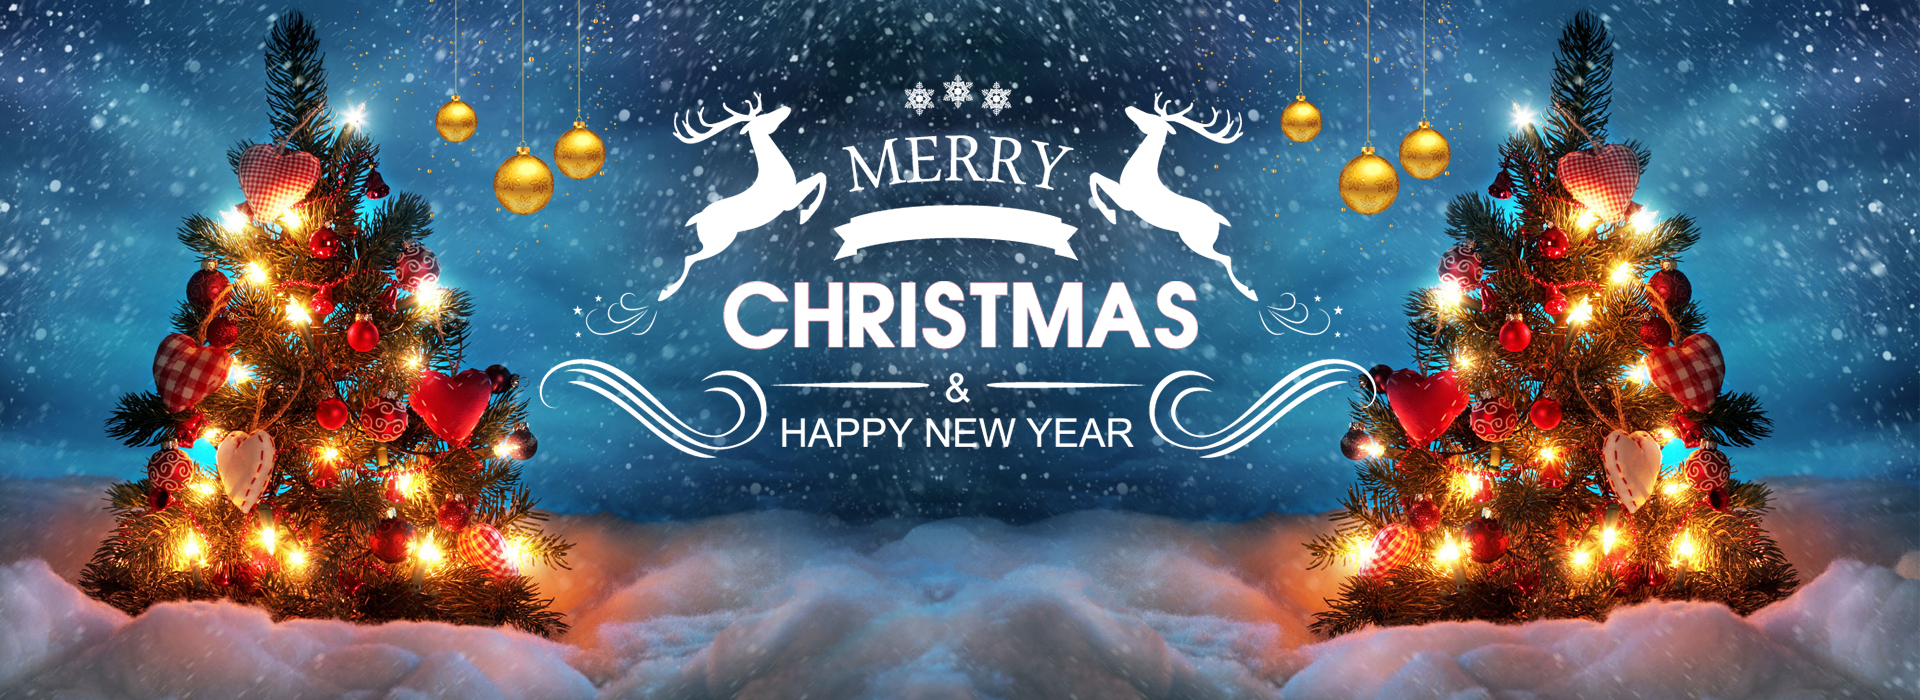 BOYIN Digital Technology Co., ltd မှ ပျော်ရွှင်ဖွယ်ရာ ခရစ်စမတ်နှစ်သစ်ဖြစ်ပါစေ။